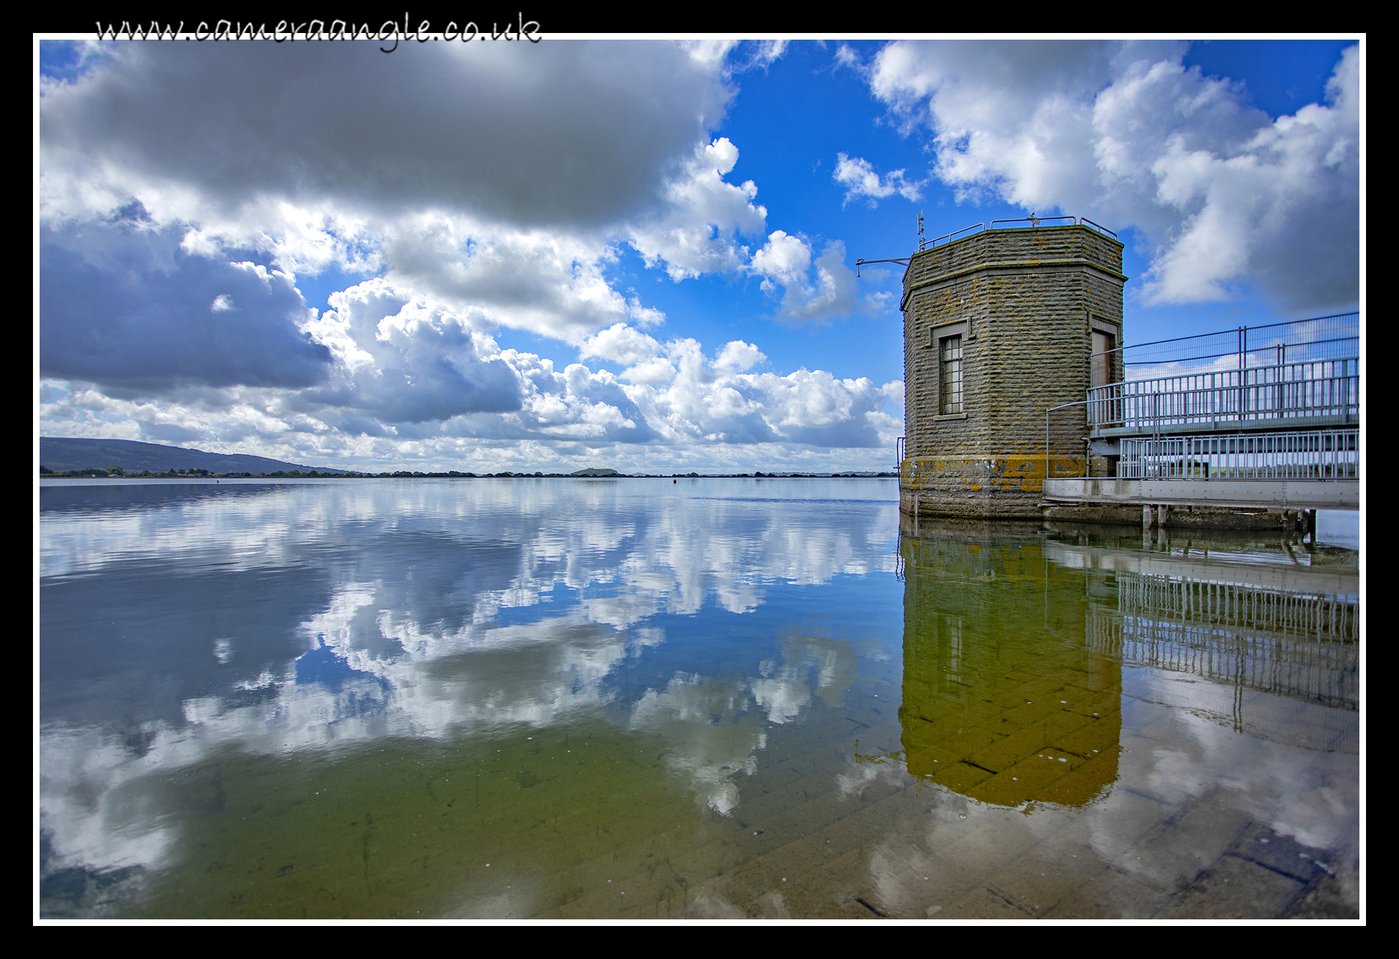 Cheddar Reservoir Tower
Keywords: Cheddar Reservoir Tower Mendips Tour